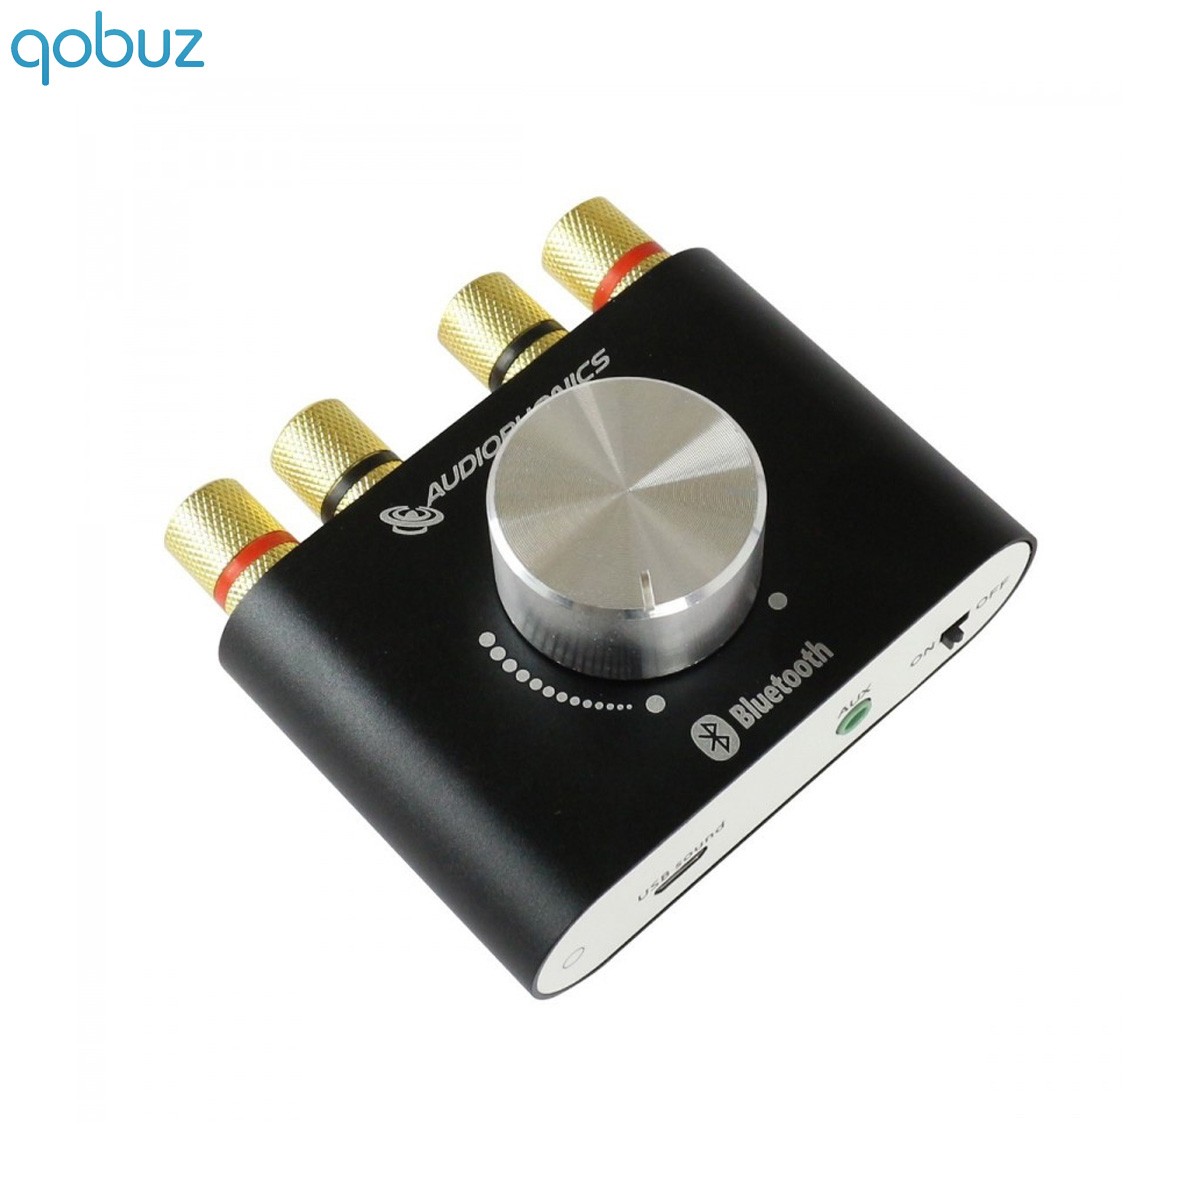 AUDIOPHONICS BT60W V2 Amplificateur TPA3116 DAC USB HiFi Bluetooth